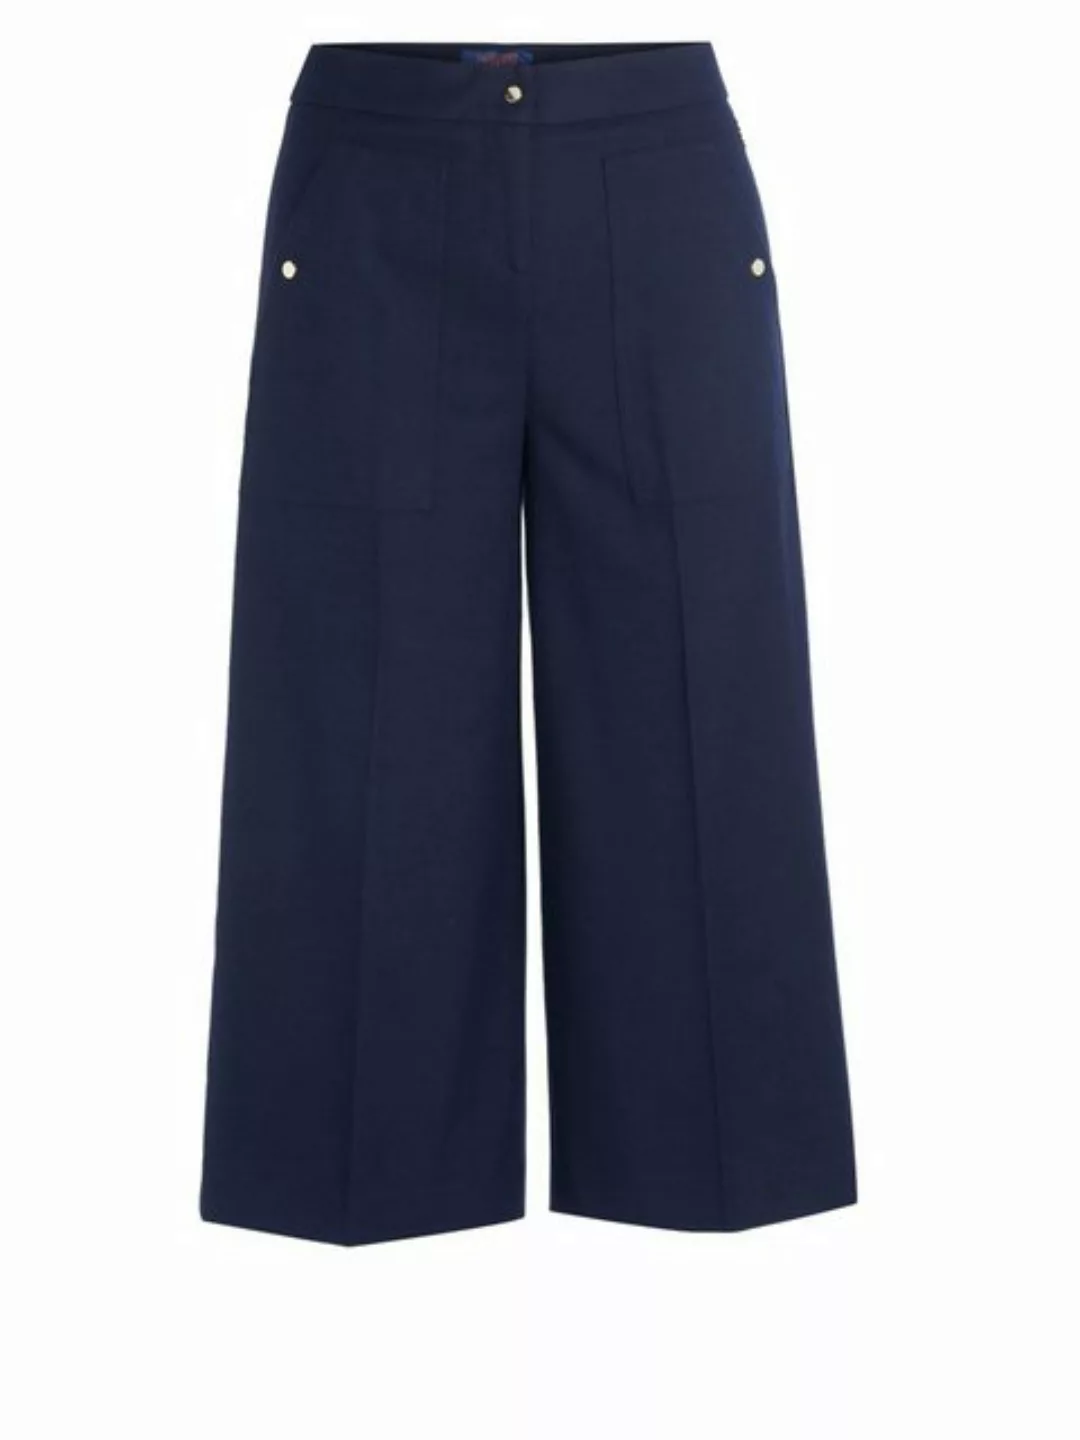 Trussardi Jeans Caprihose Trussardi jeans Hose navy günstig online kaufen